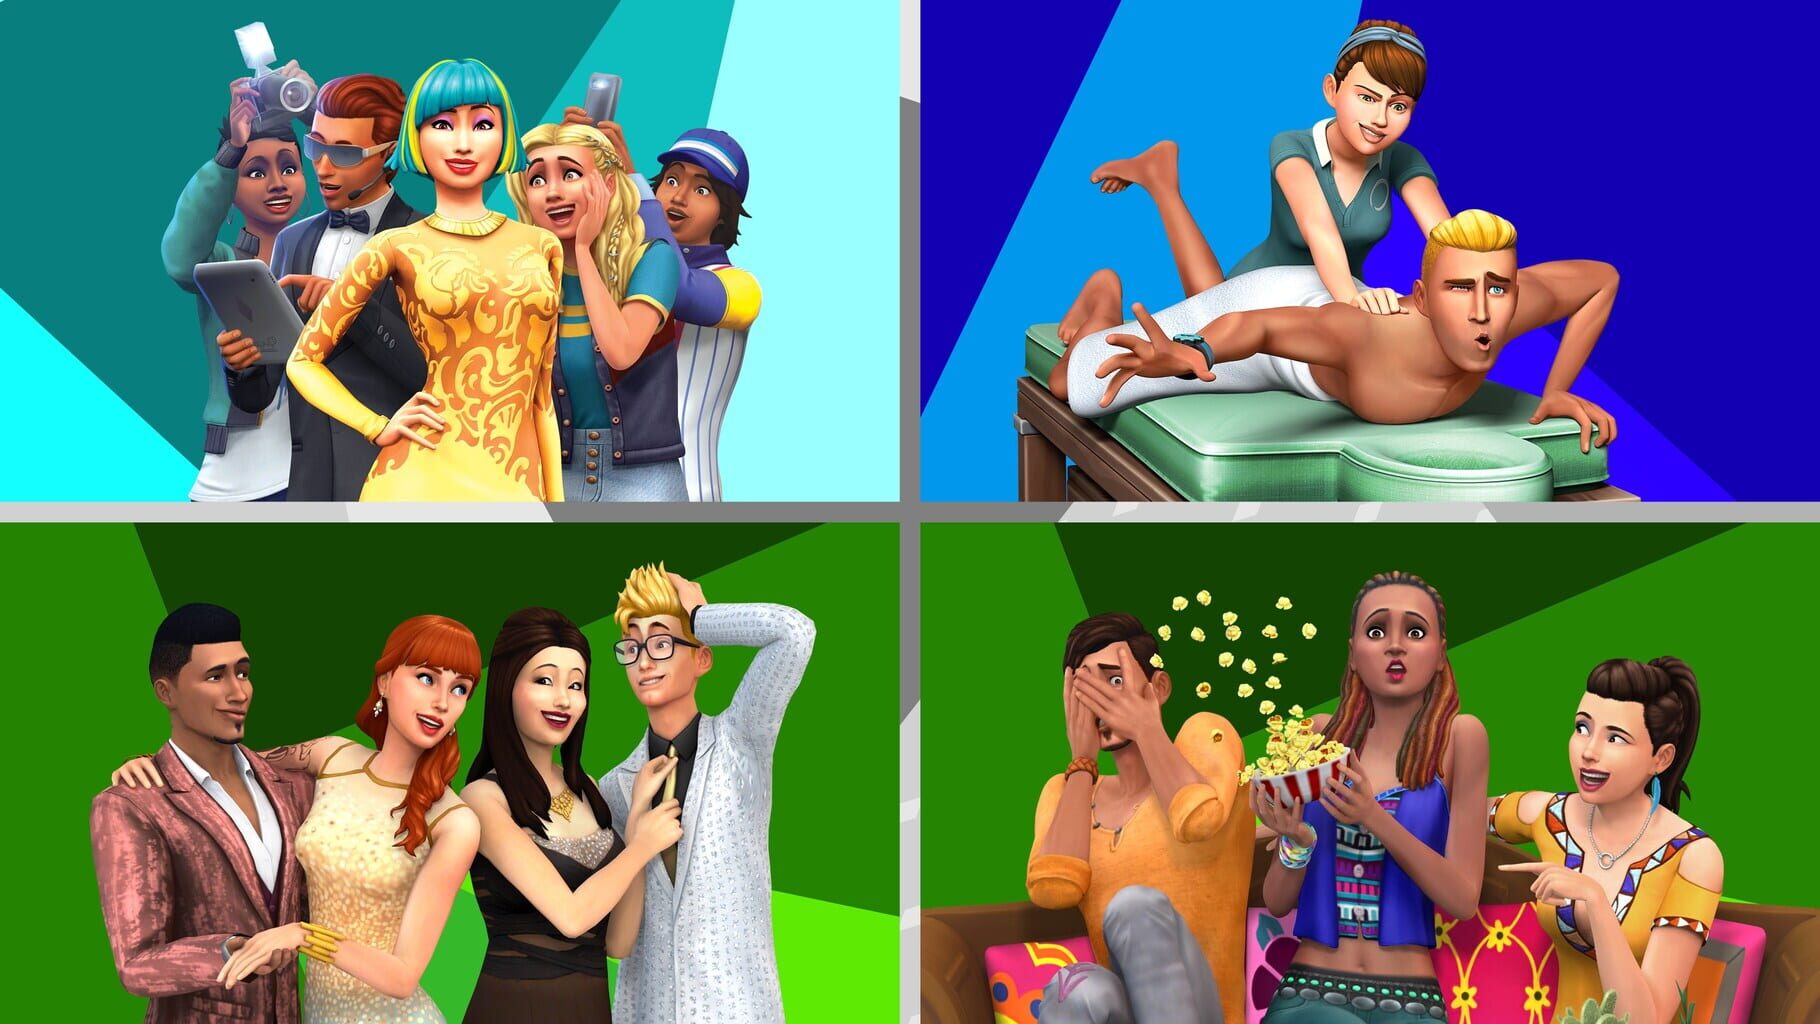 Arte - The Sims 4: Live Lavishly Bundle